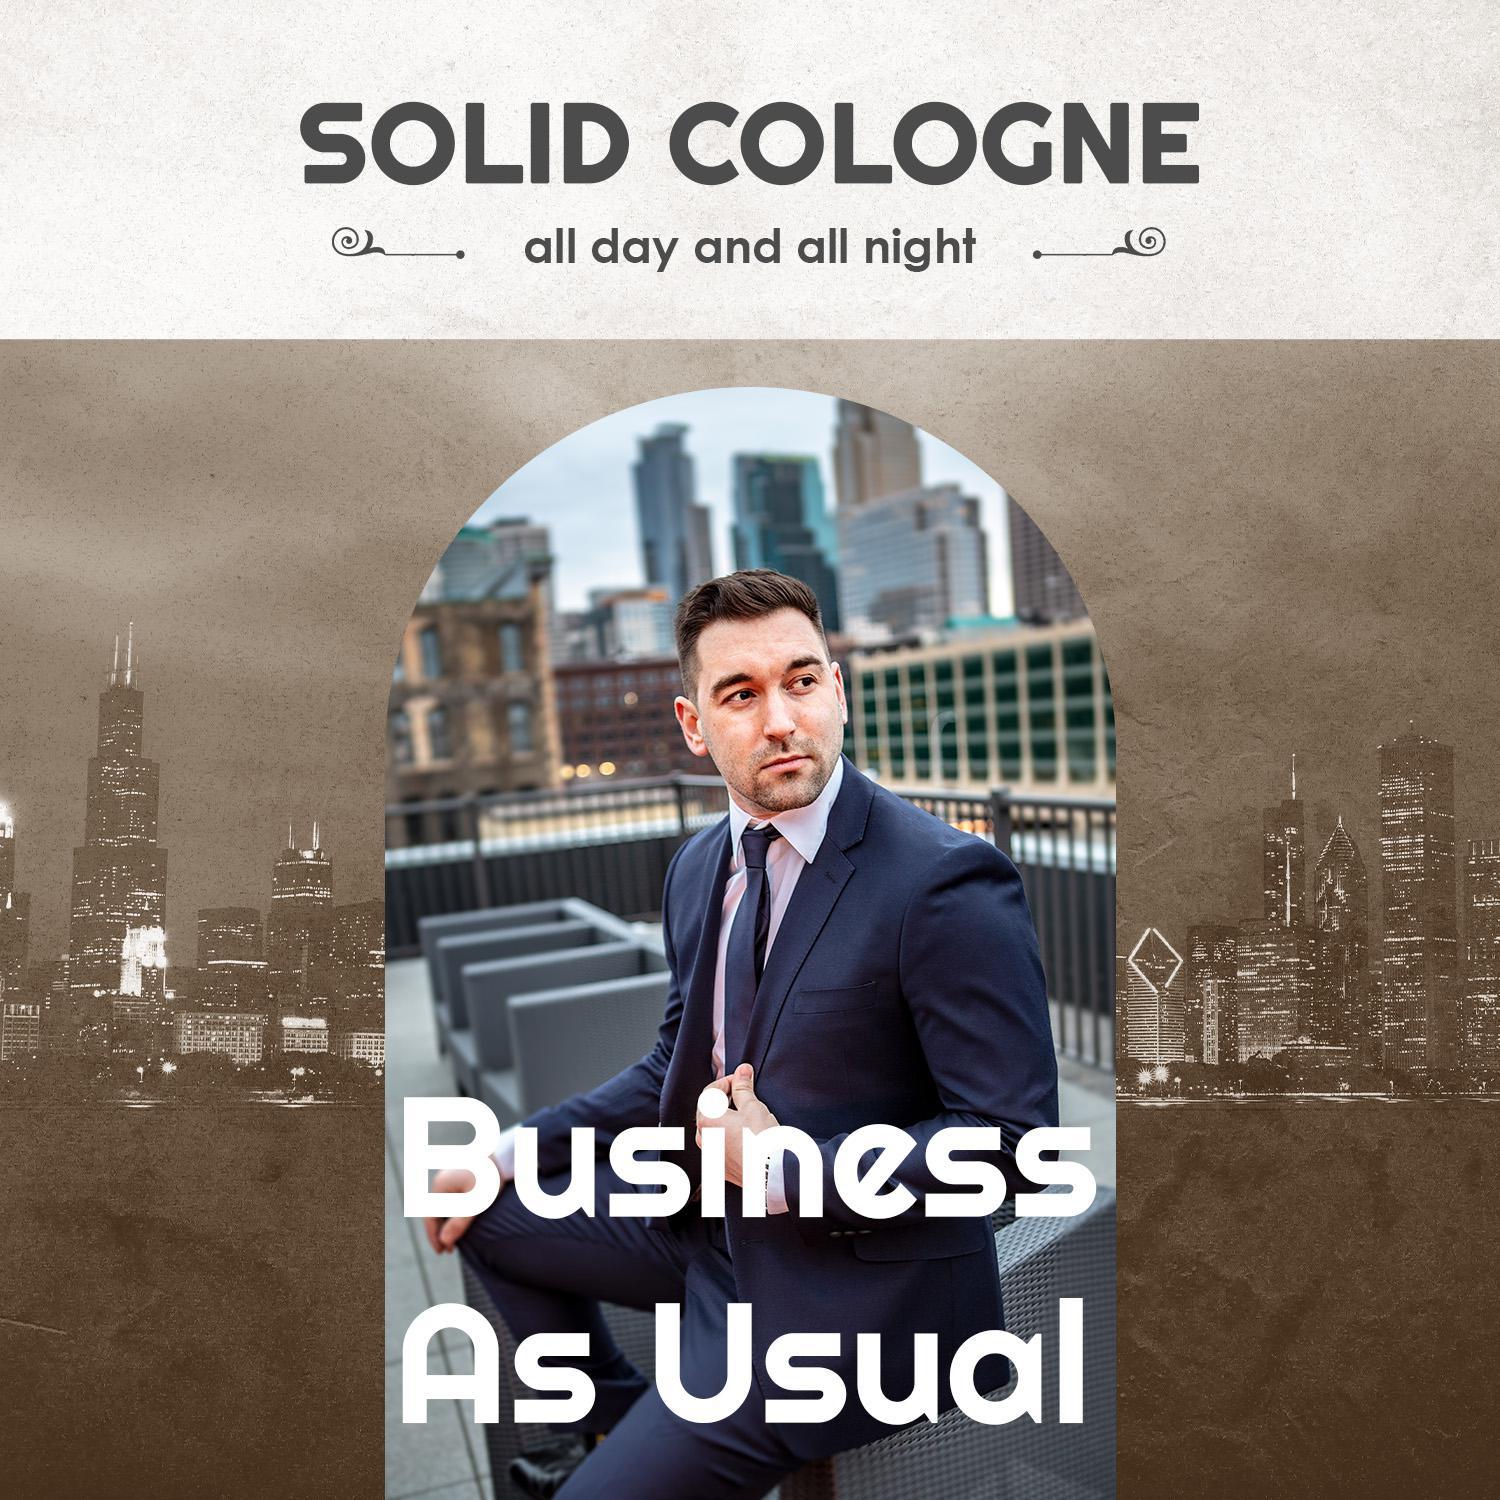 The Man Brand’s Solid Cologne for Men - Travel Size Natural Solid Men’s Cologne - Men's Fragrance Solid Cologne - Convenient Pocket Size